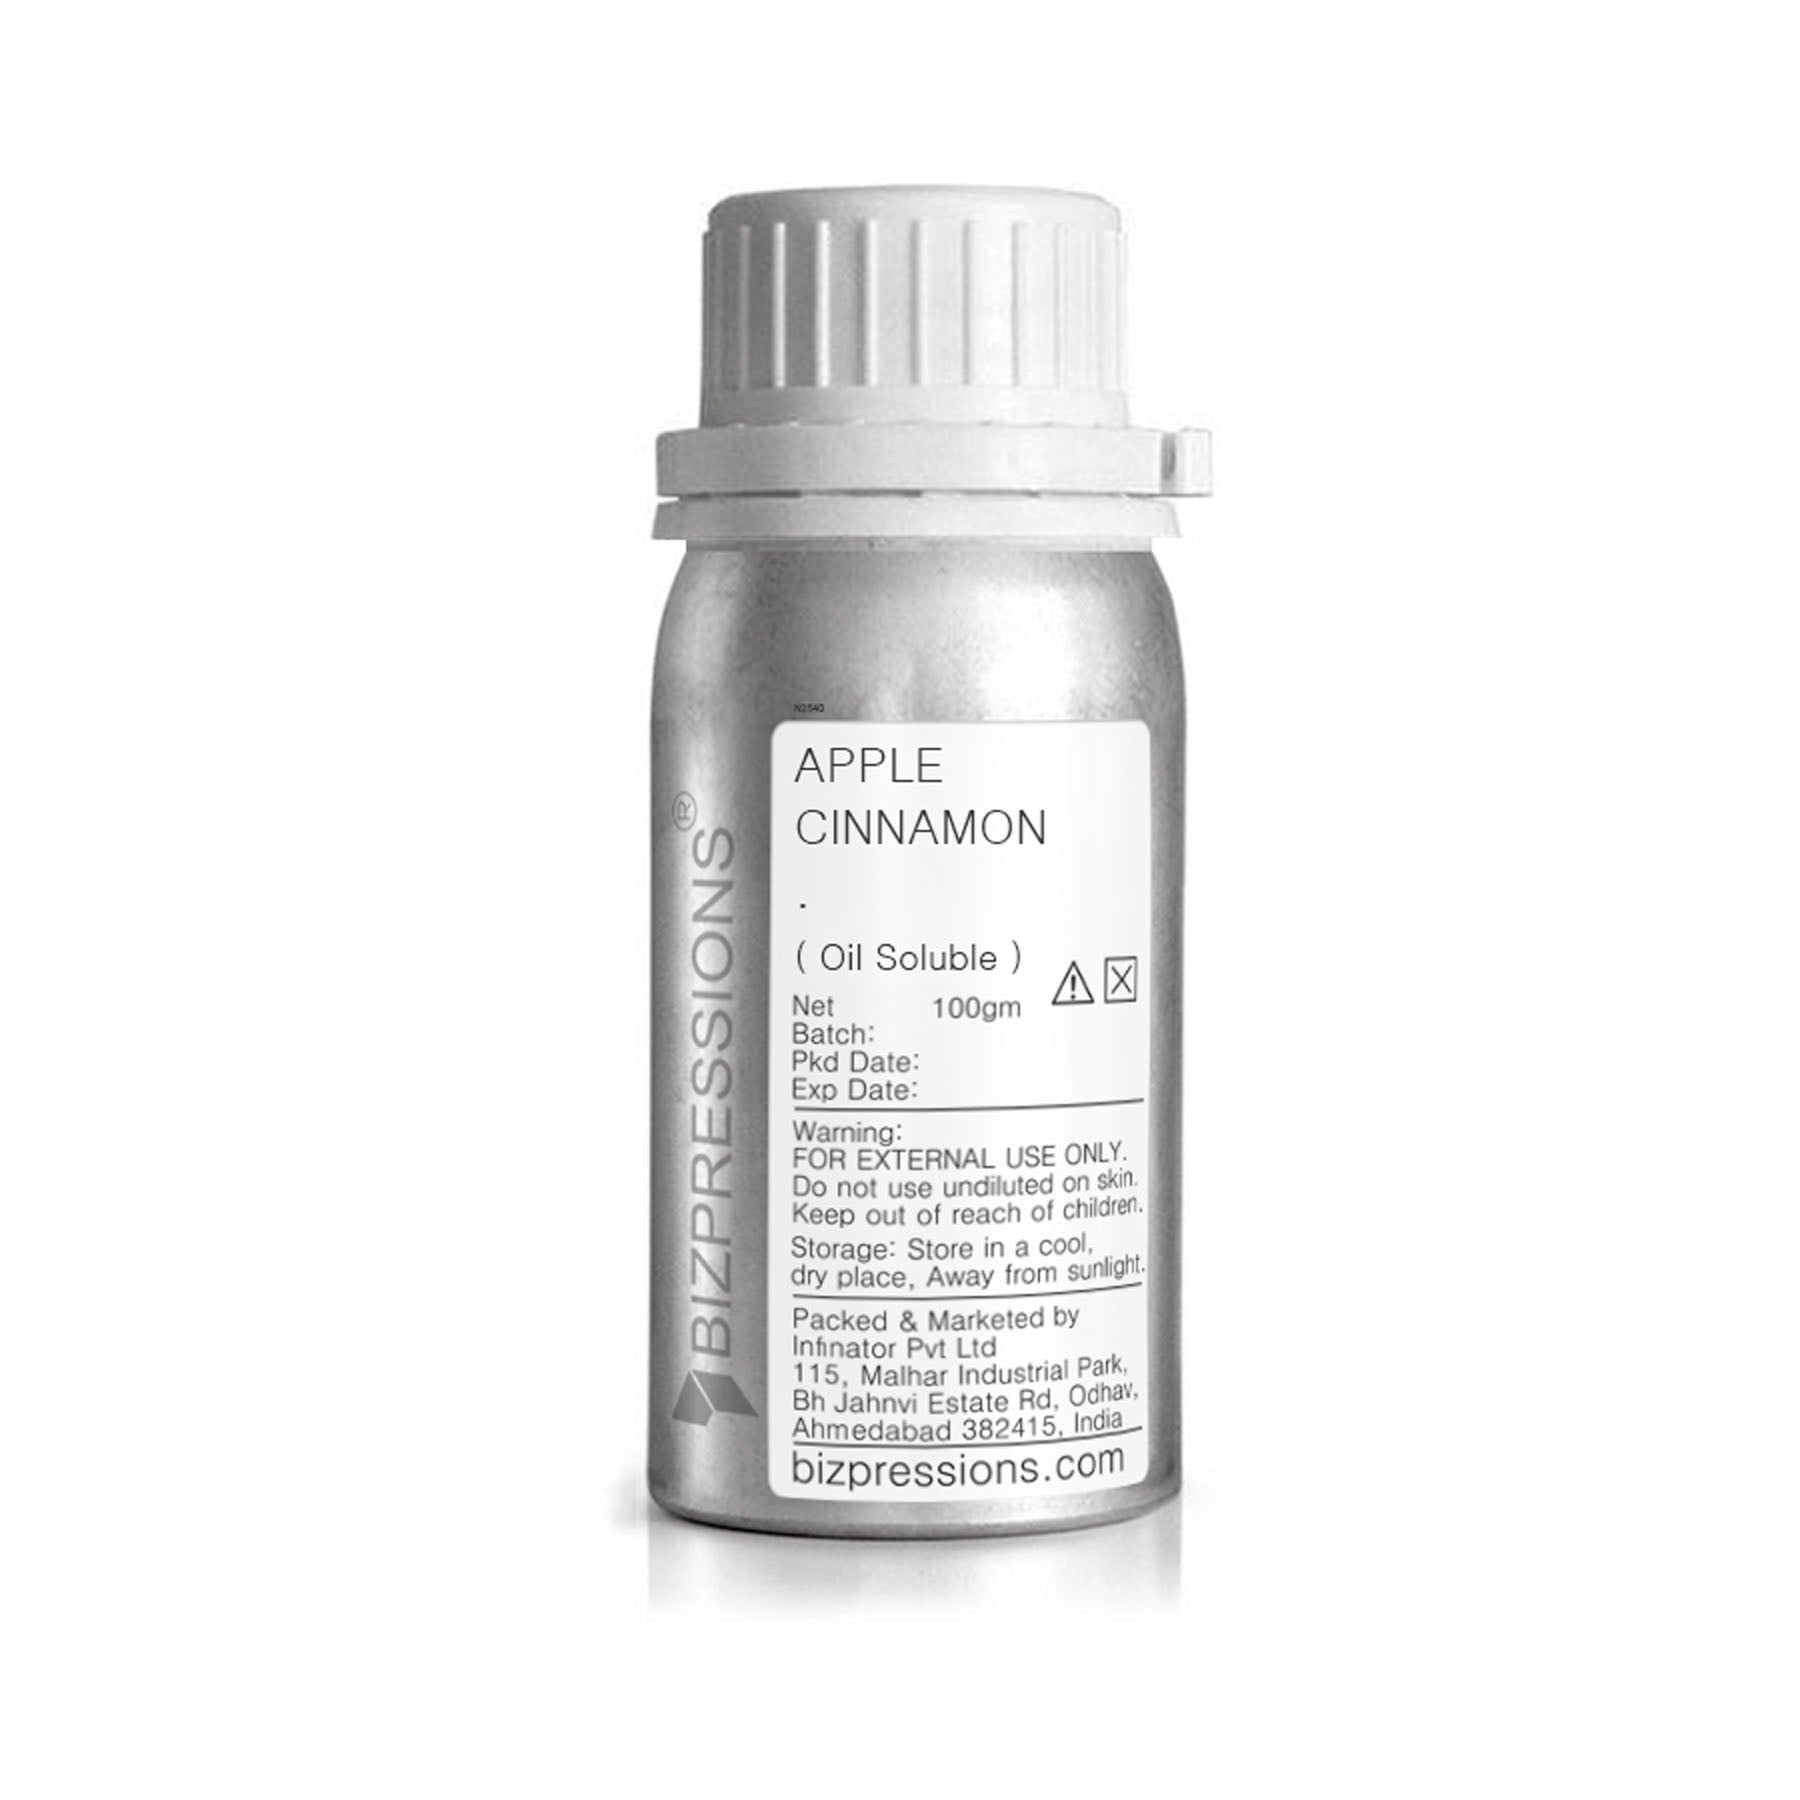 APPLE CINNAMON - Fragrance ( Oil Soluble ) - 100 gm